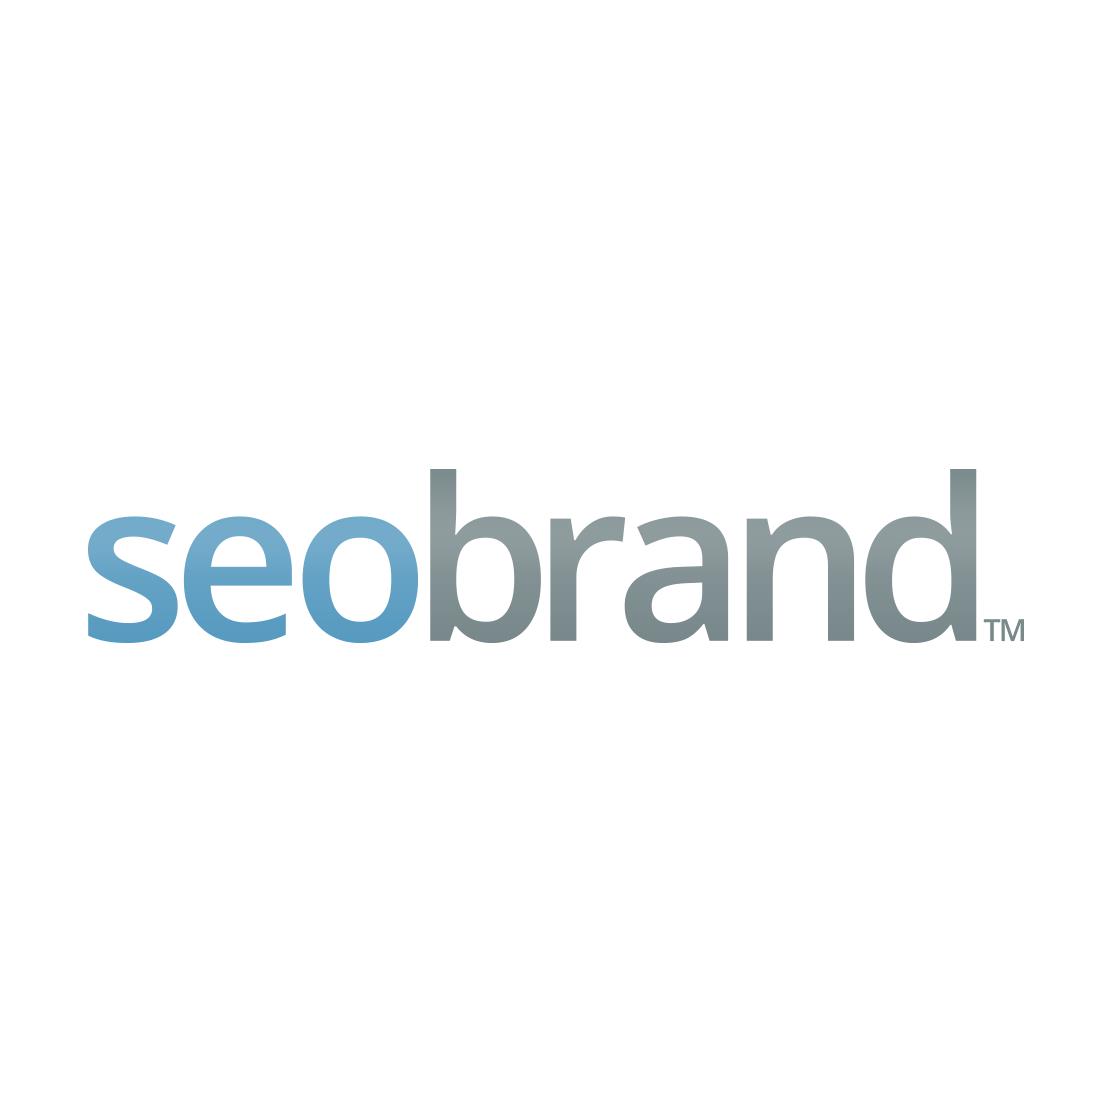 Top SEO Company Logo: SEO Brand